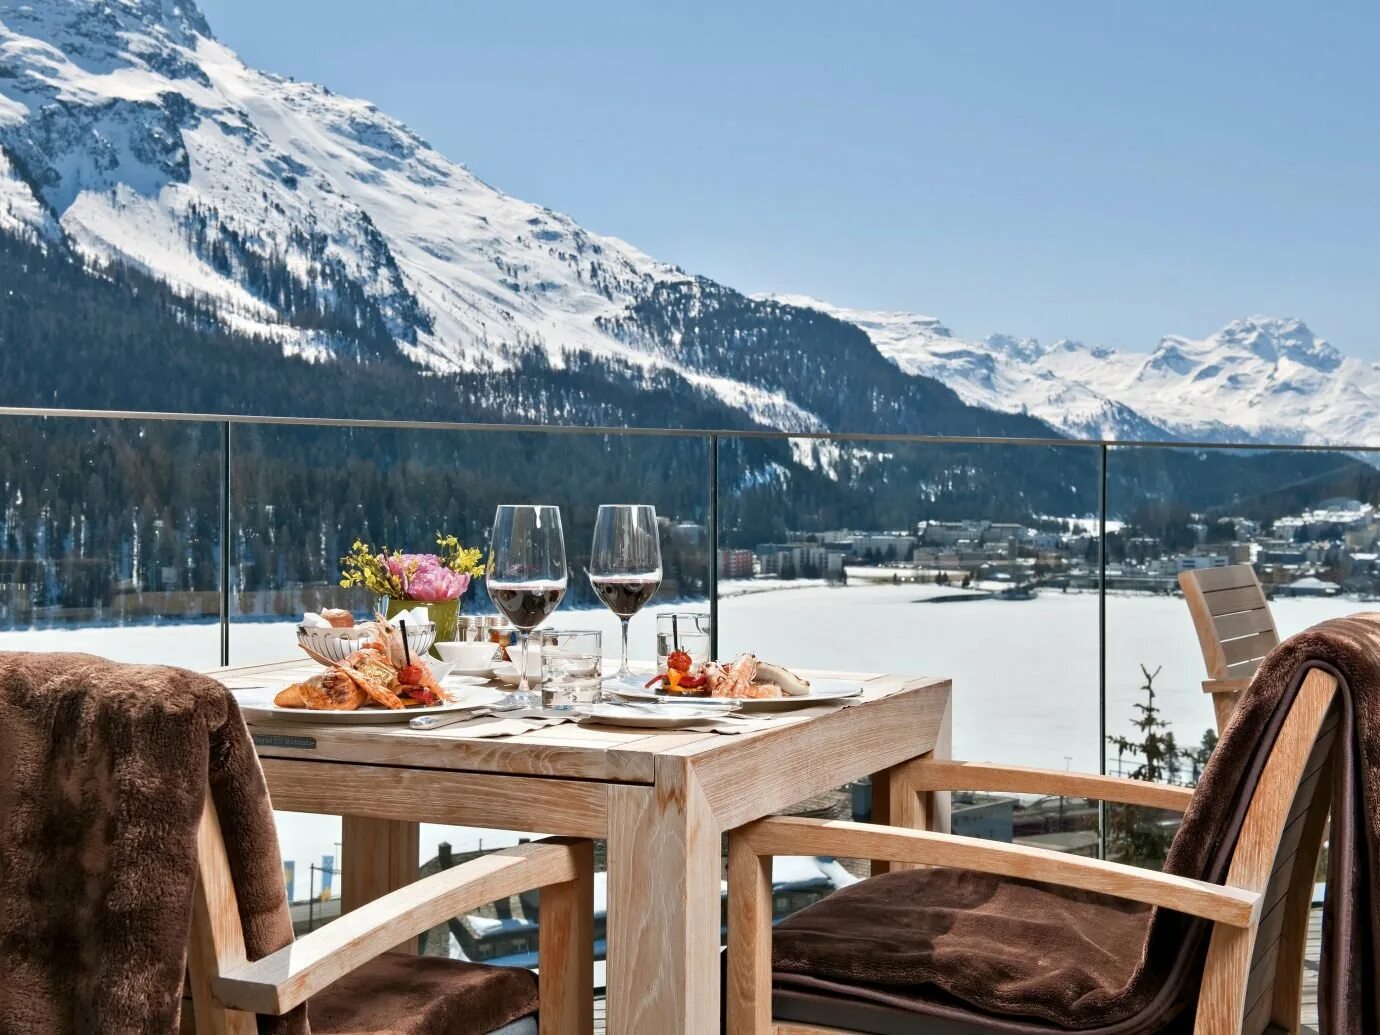 Carlton Hotel St Moritz. Кафе Церматт Швейцария. Отель вершина Альпы Швейцария. St.Moritz (Сант-Мориц) в Швейцарии Шале. Завтраки красная поляна